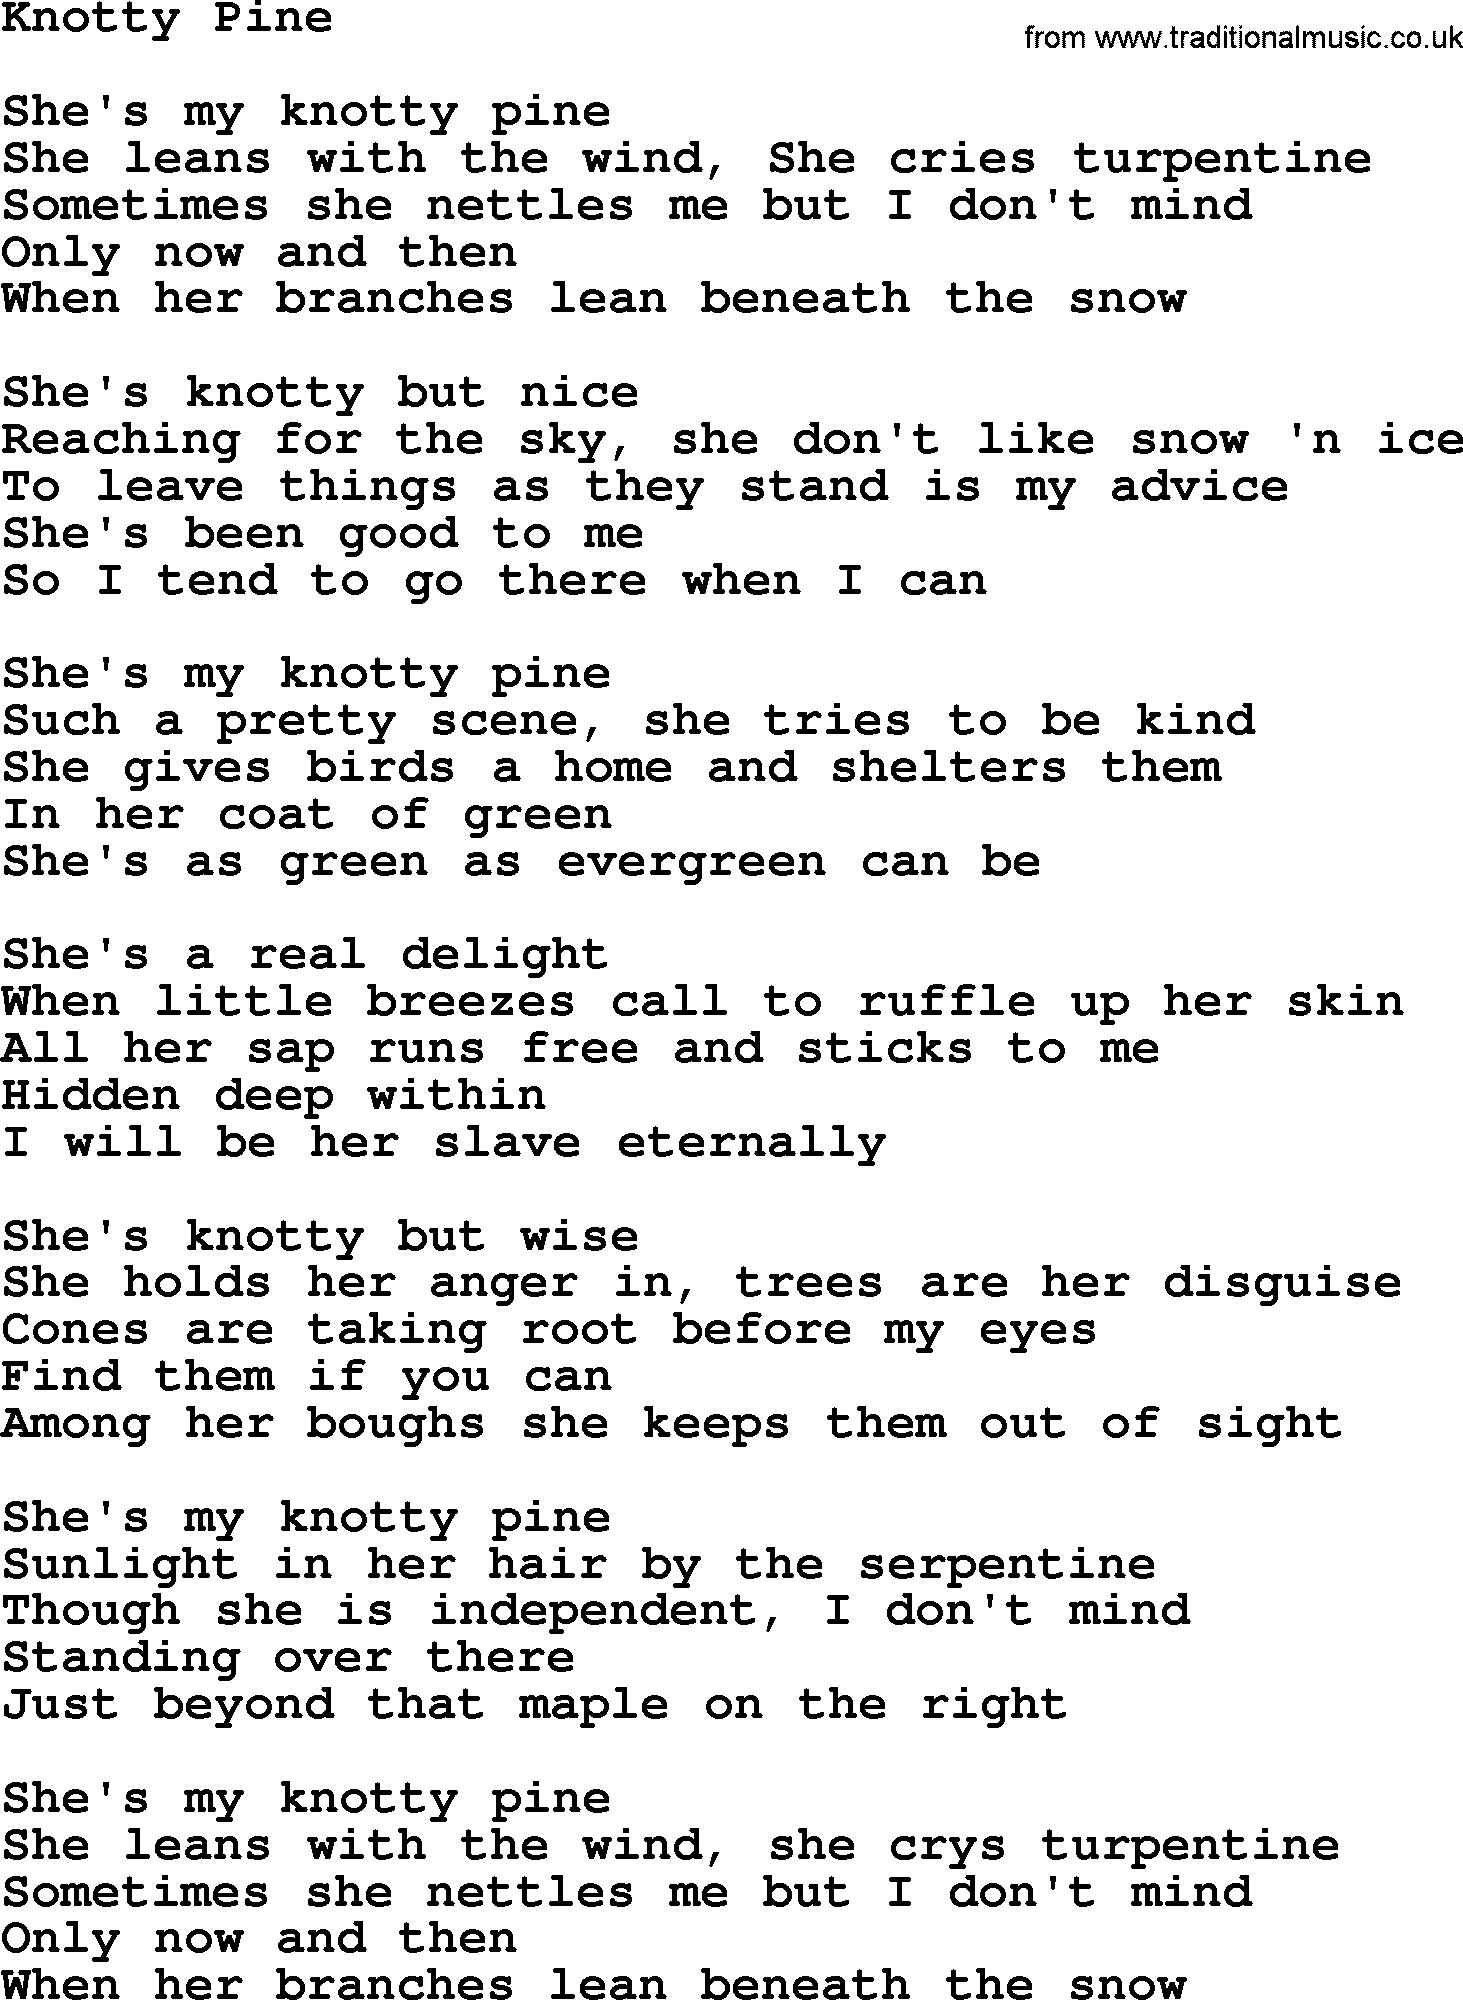 Gordon Lightfoot song Knotty Pine, lyrics